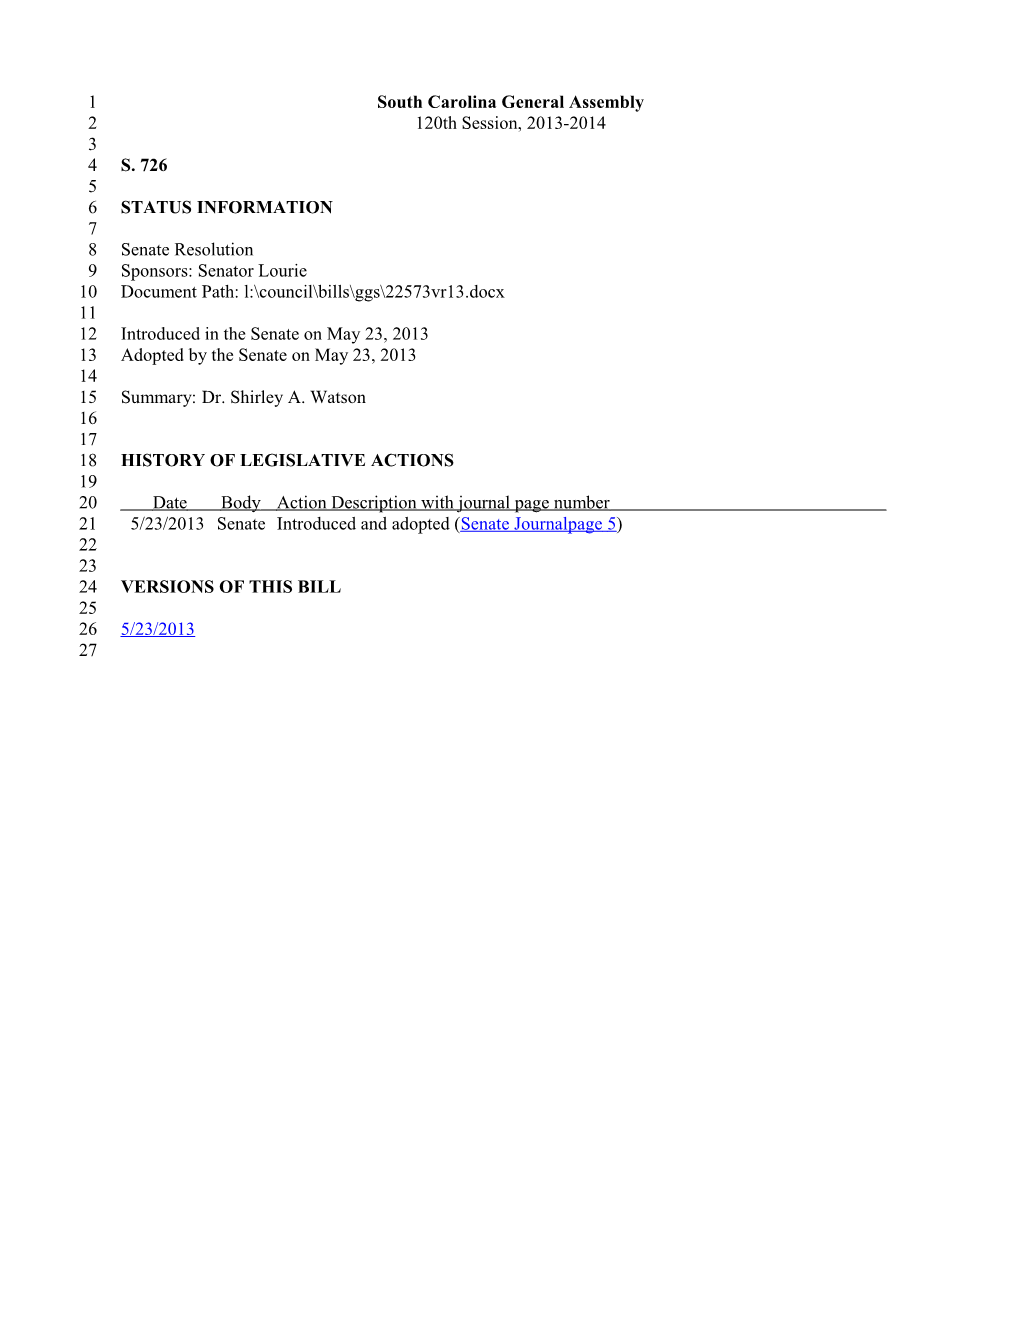 2013-2014 Bill 726: Dr. Shirley A. Watson - South Carolina Legislature Online